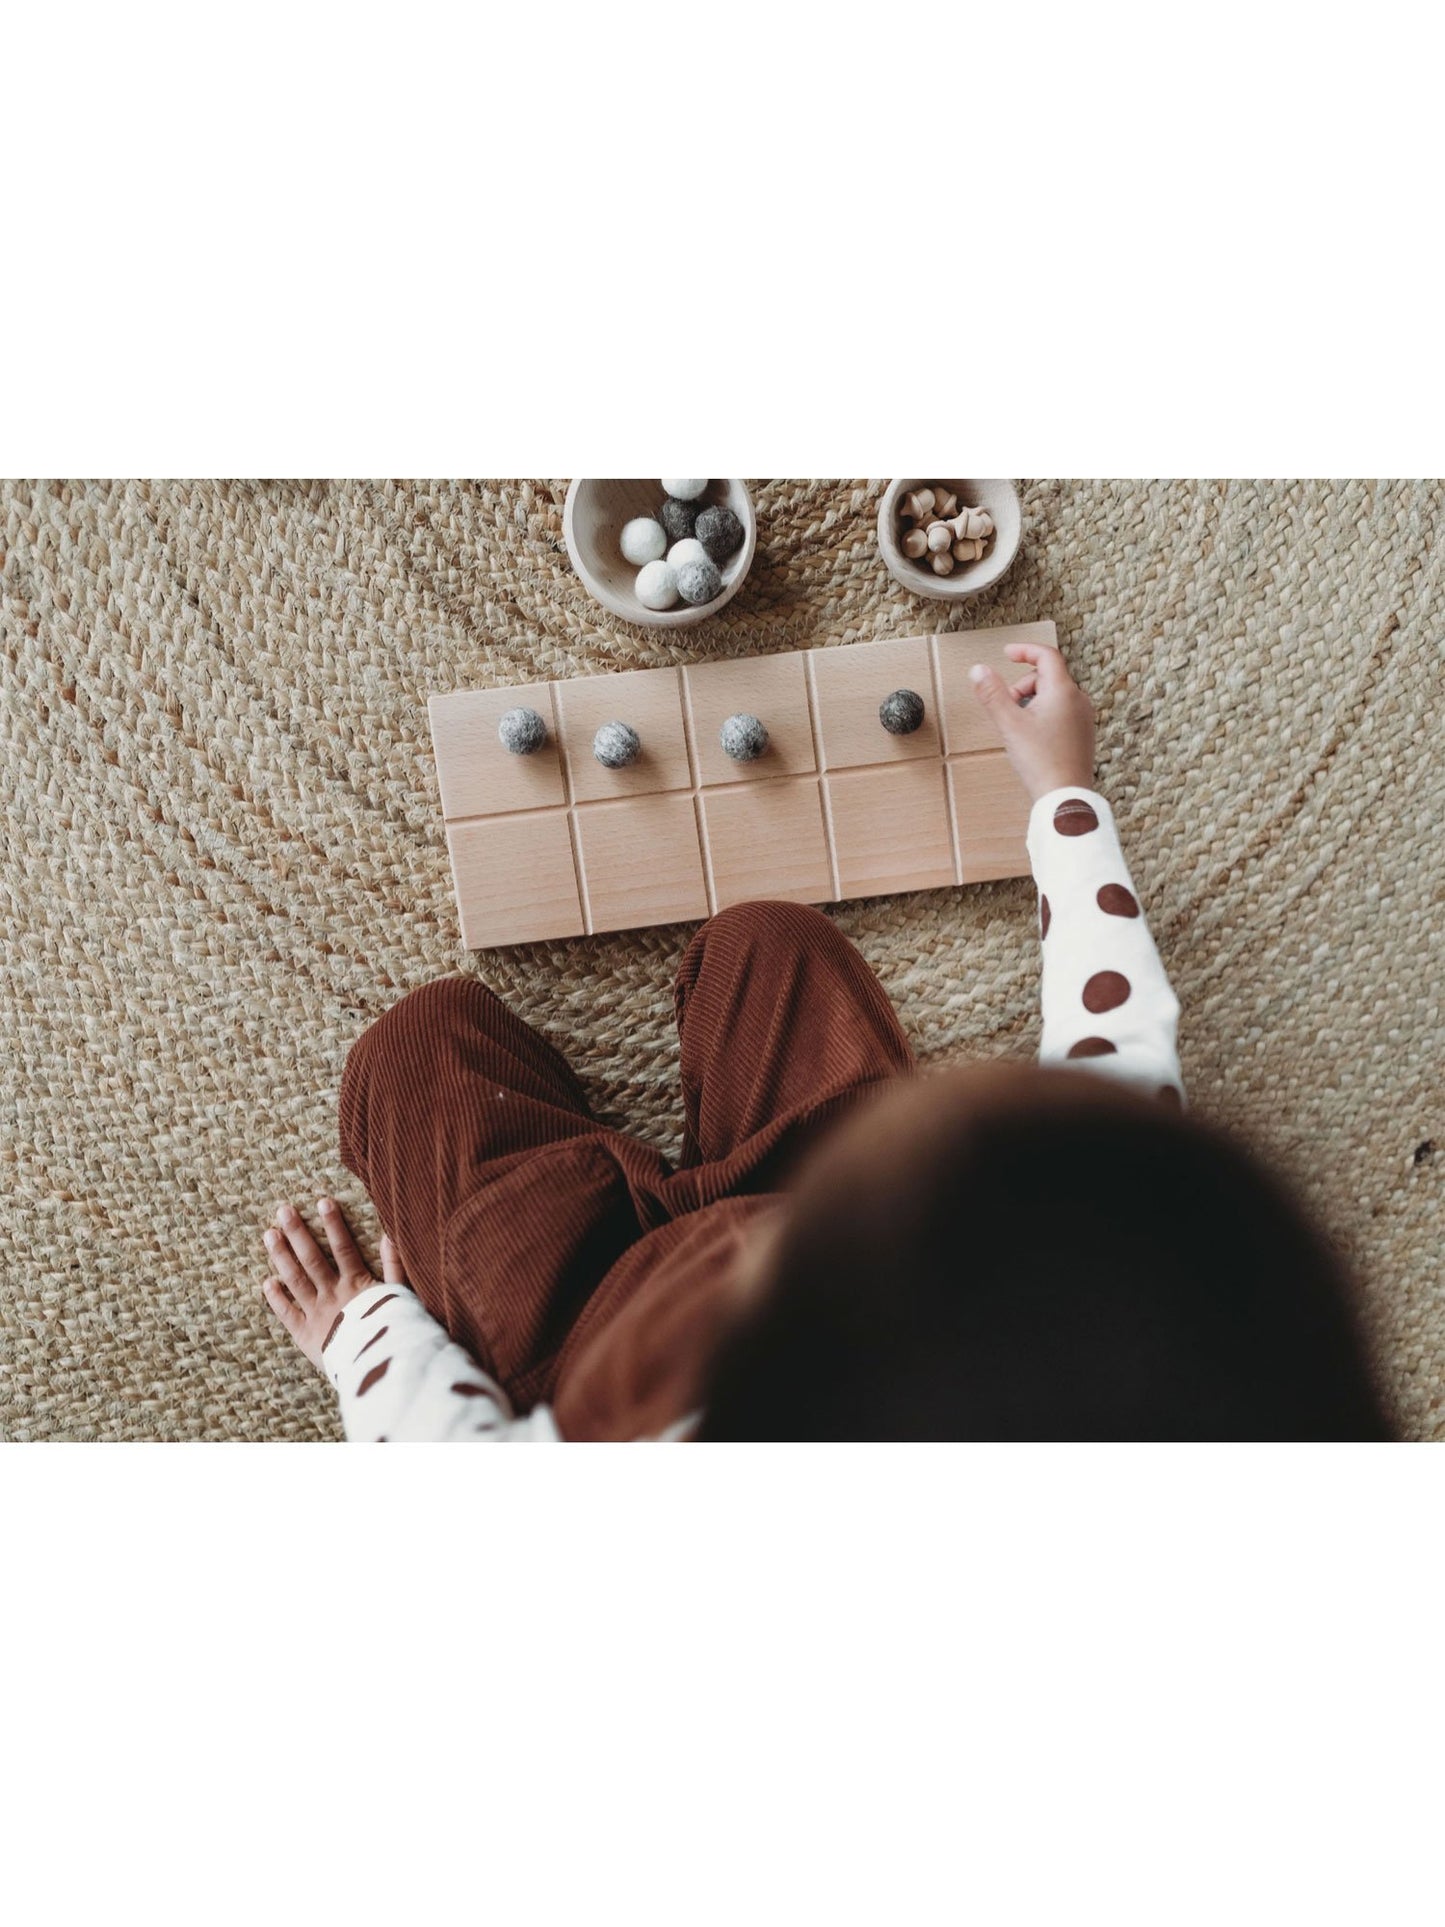 Ressource d'apprentissage Montessori The Little Coach House Tens Frame